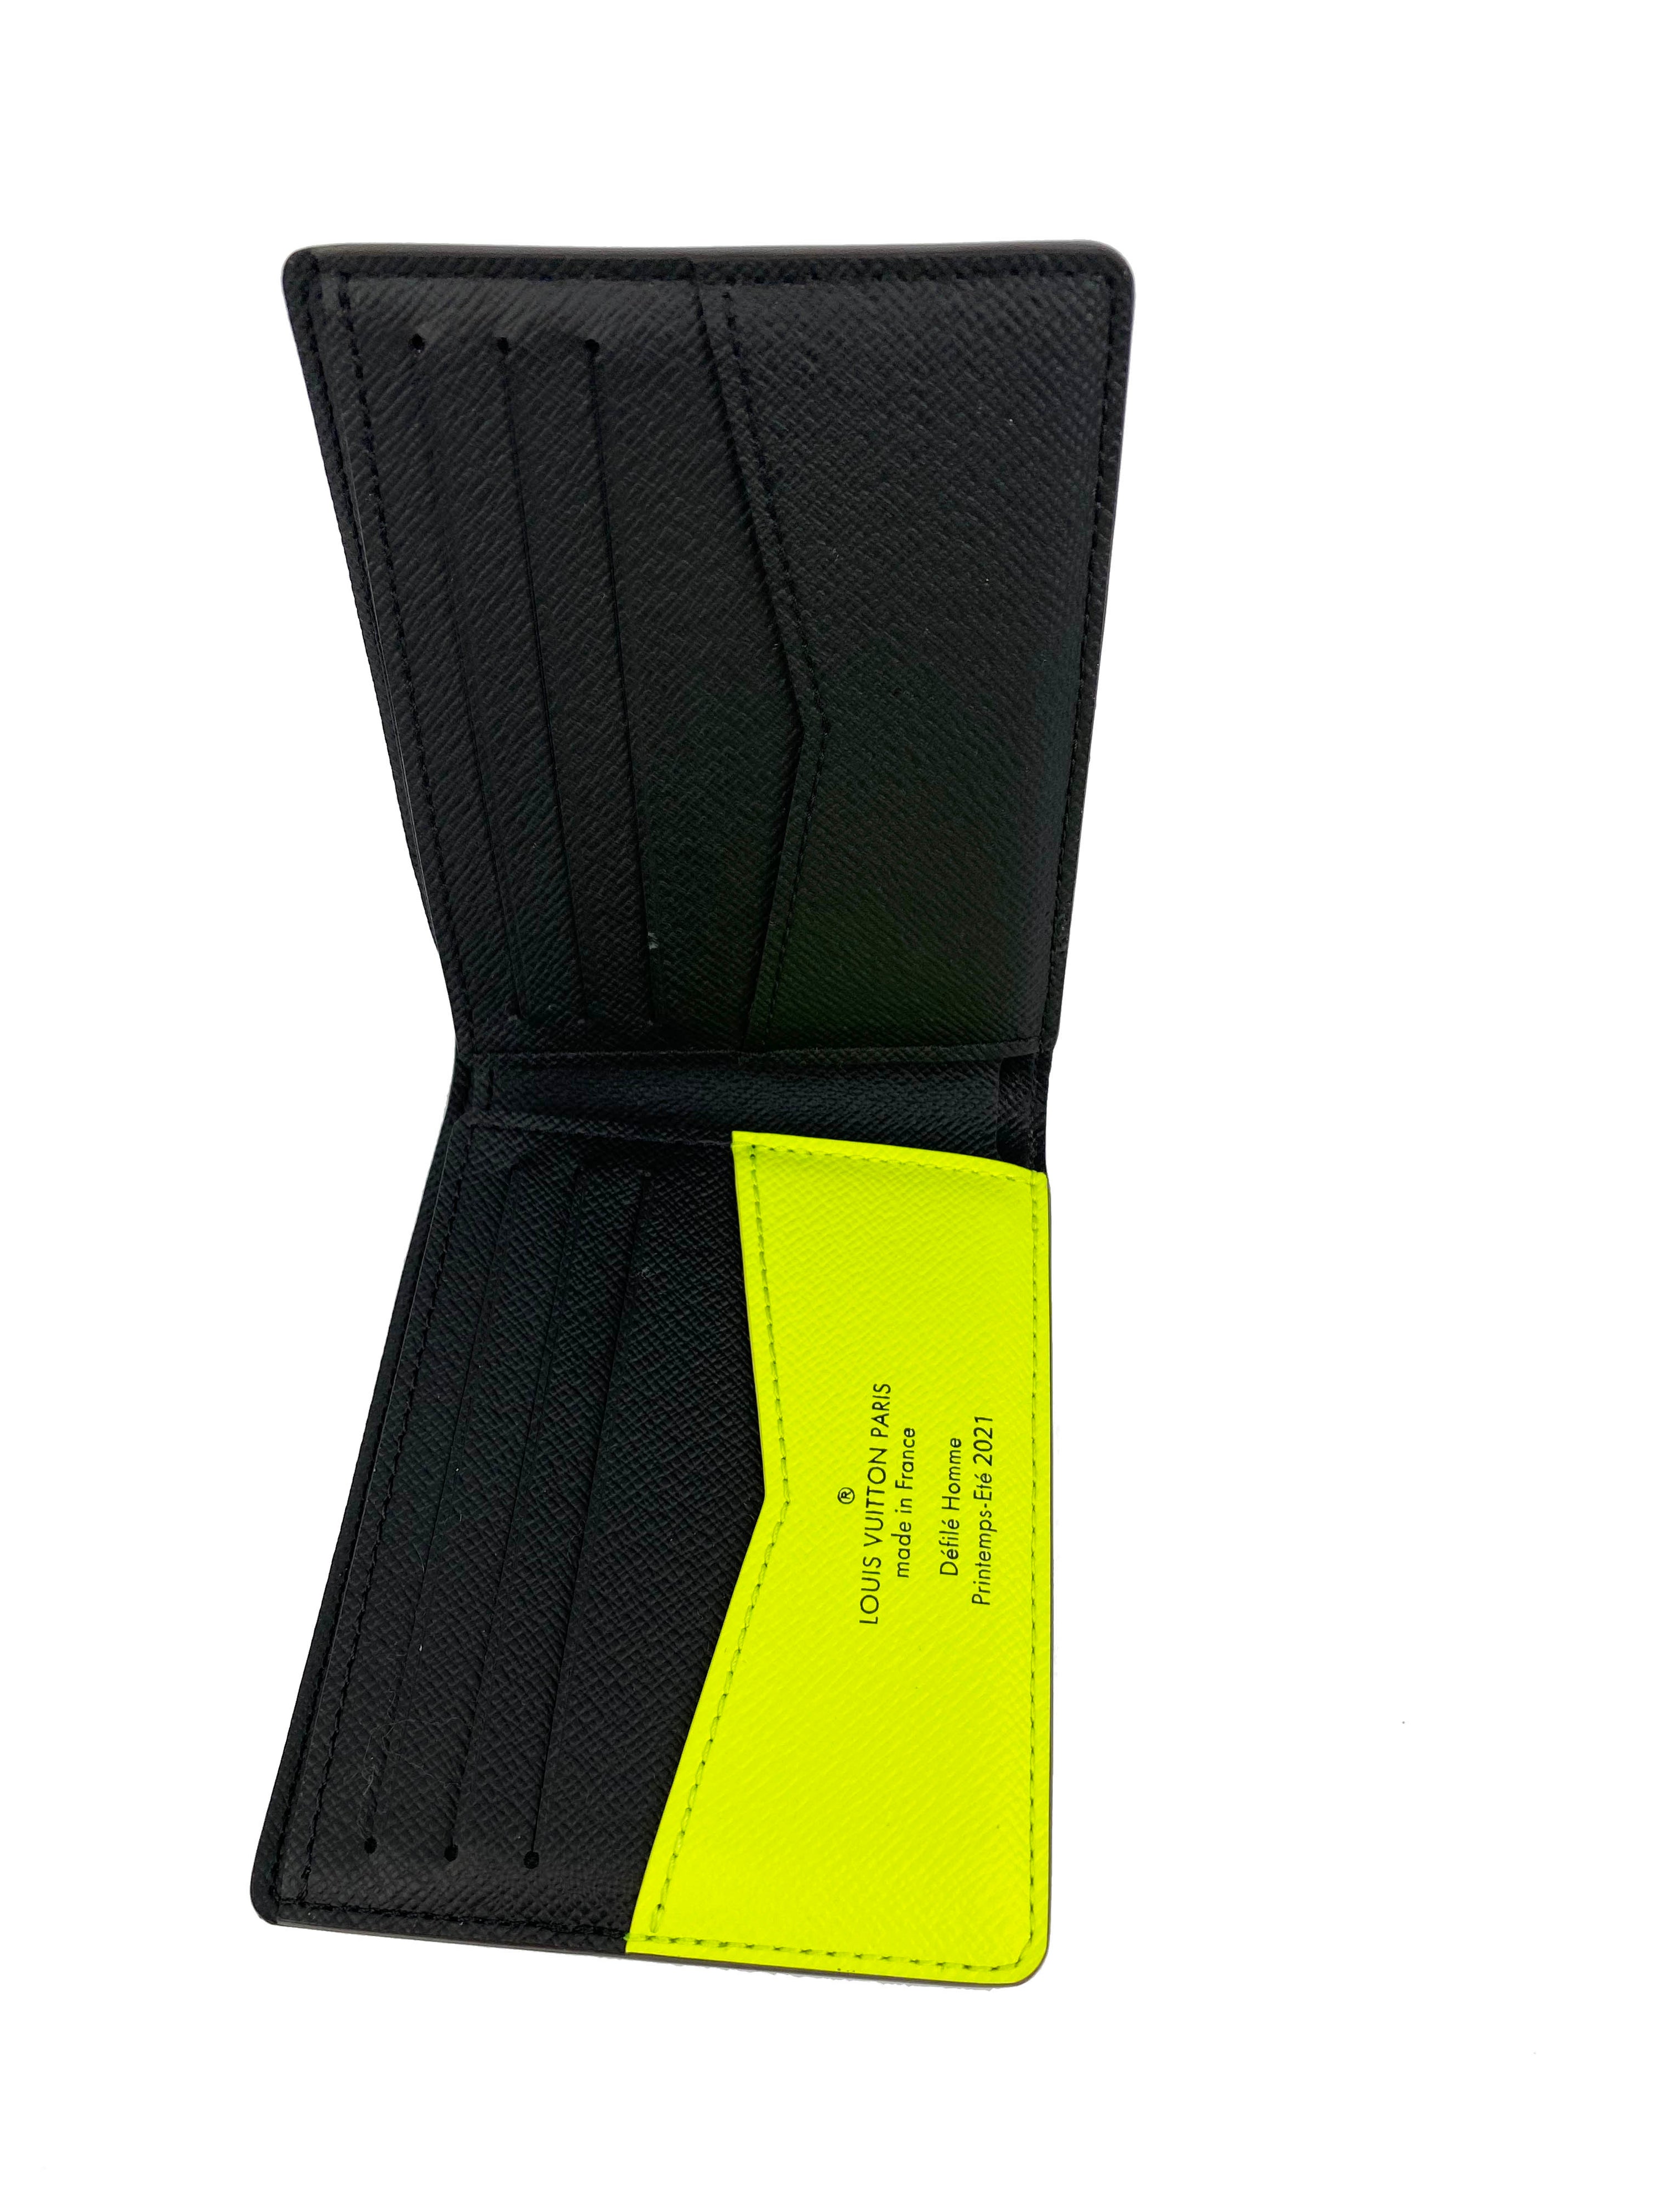 Louis Vuitton Monogram Slender Wallet